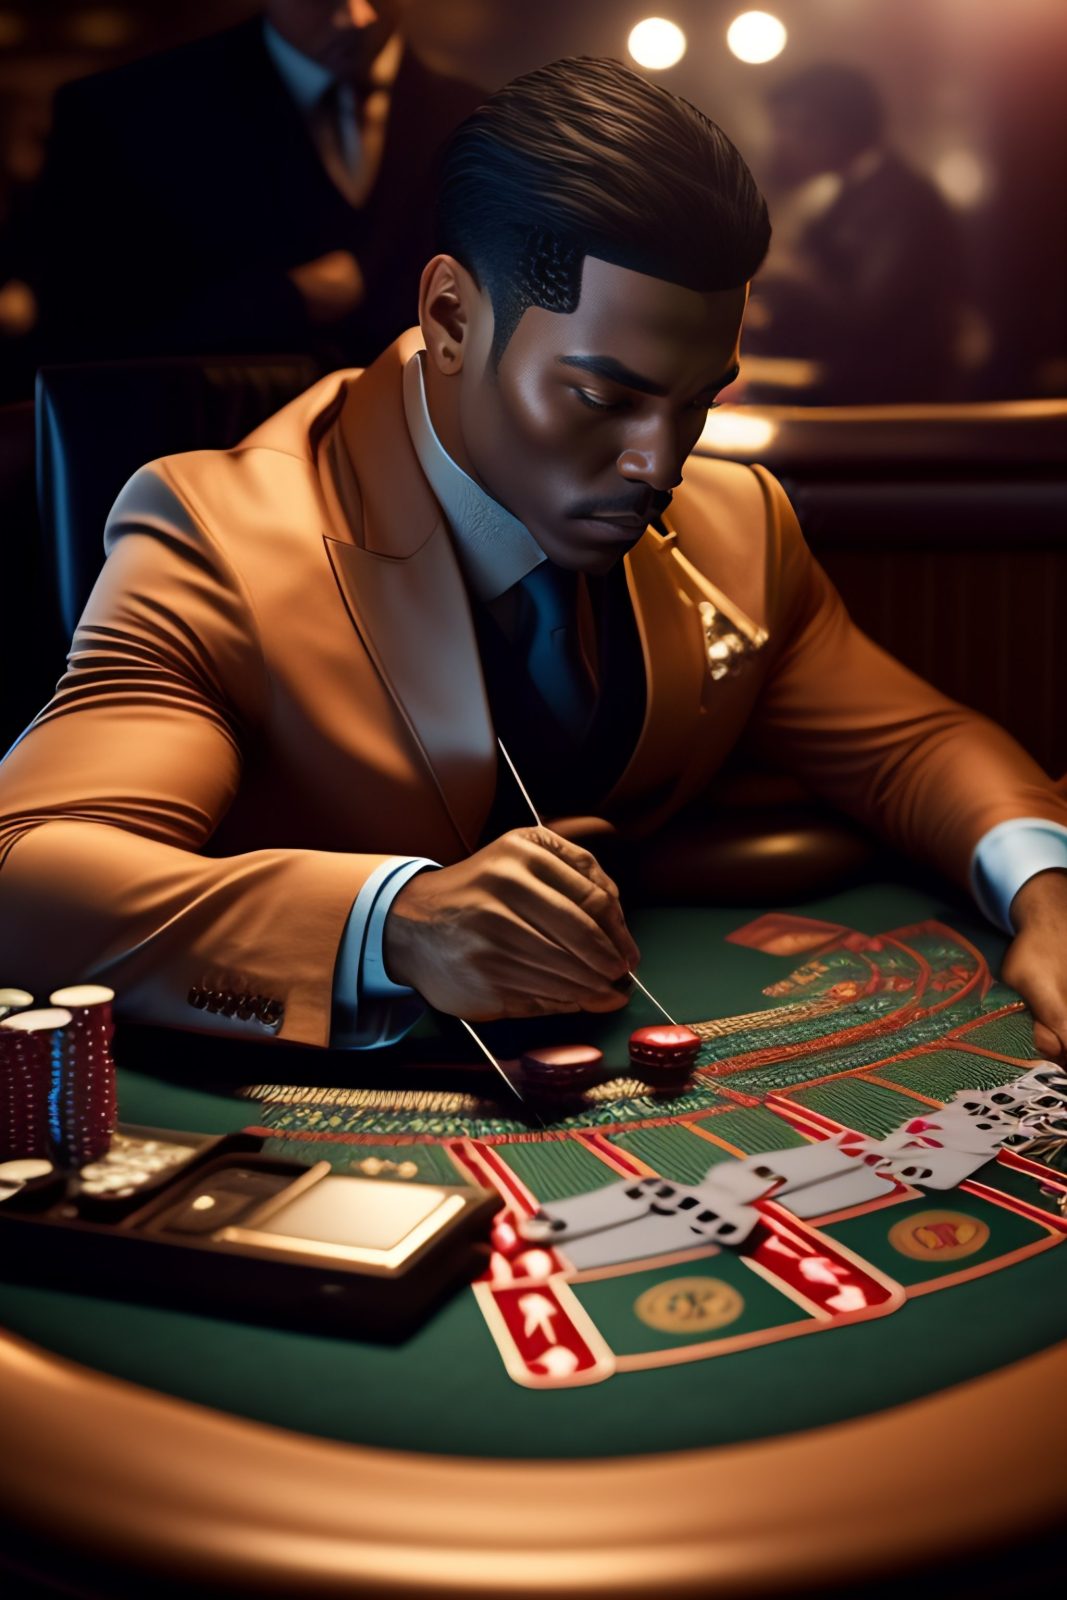 card dealer cyborg at a poker table